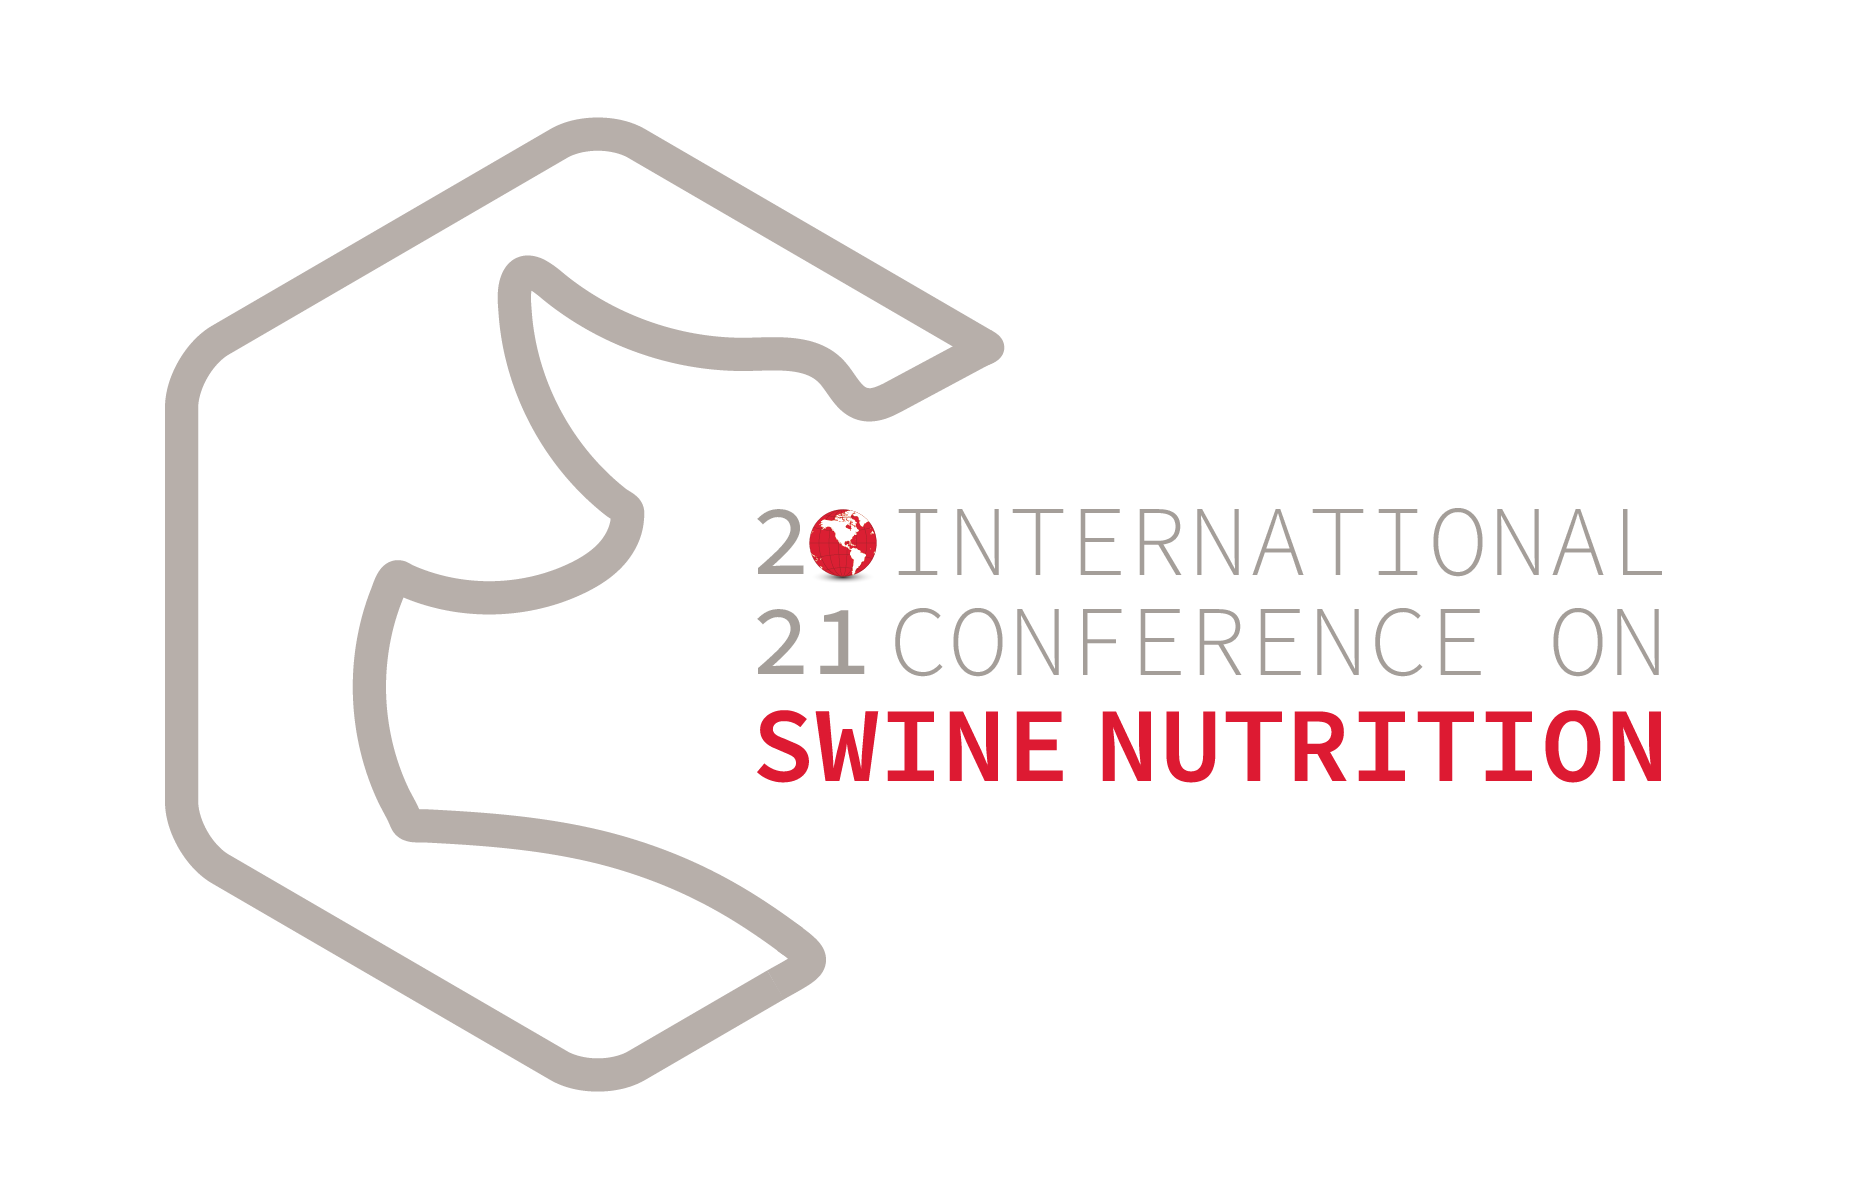 2021 International Conference on Swine Nutrition Logo